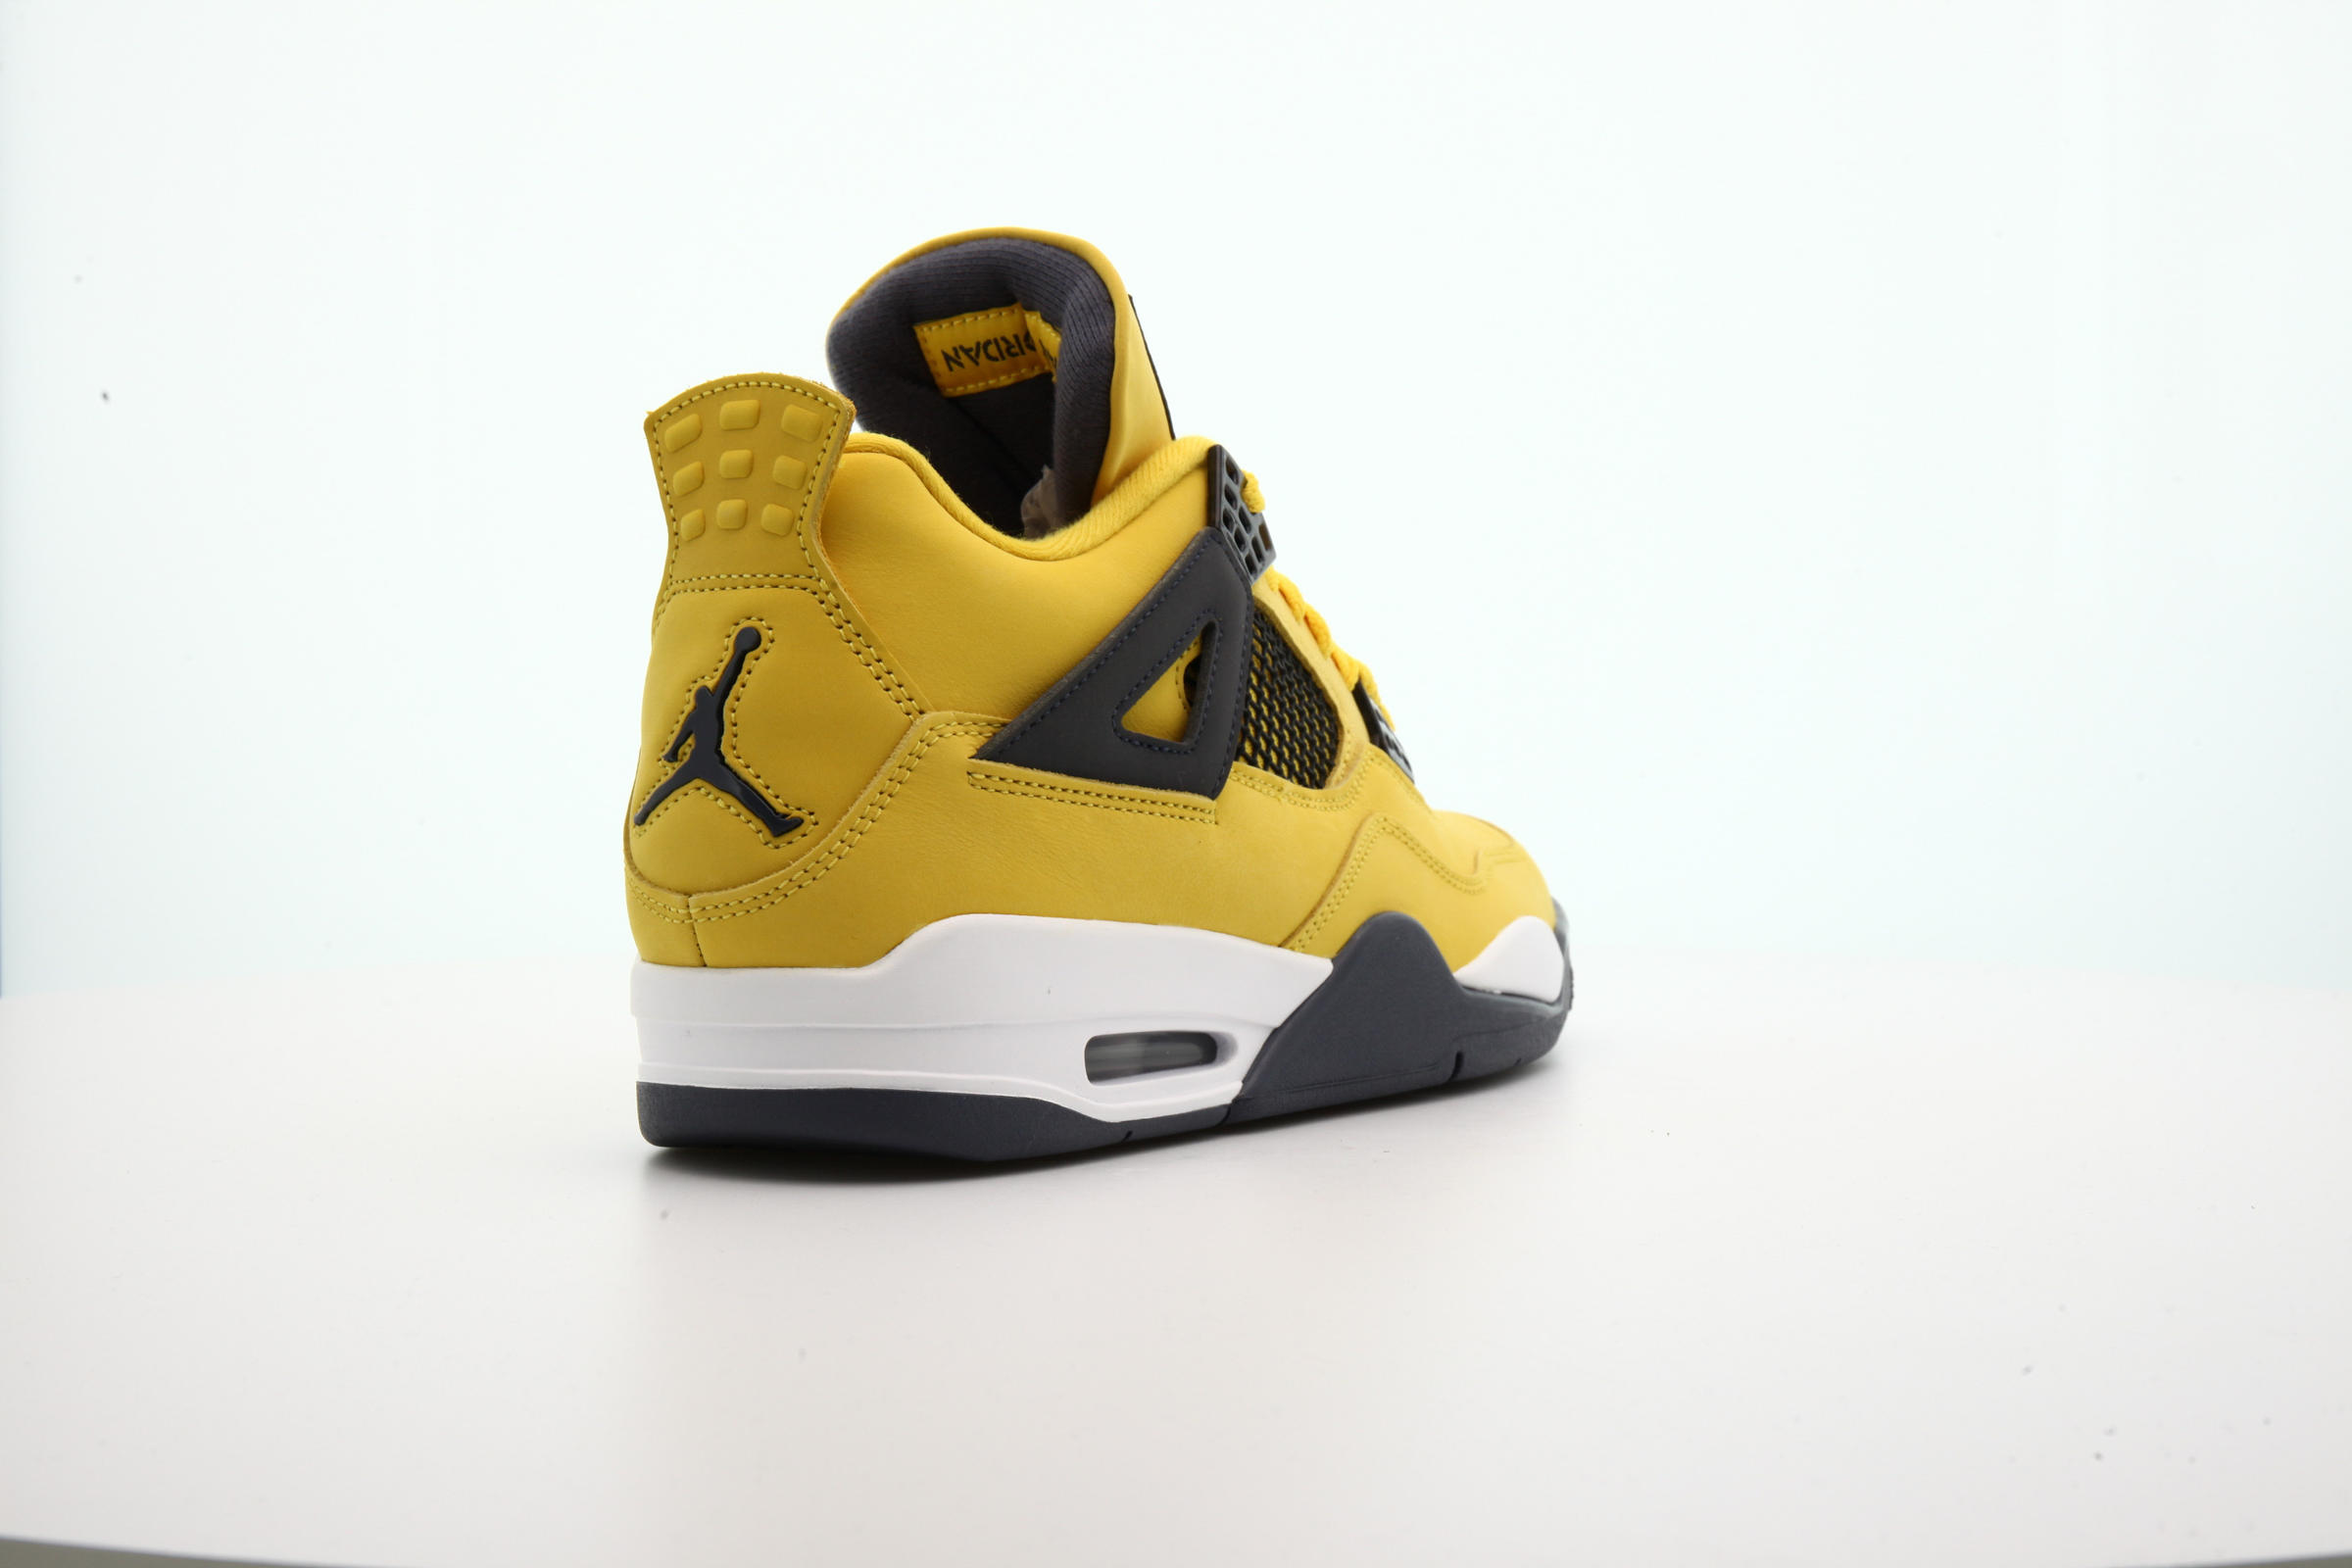 Air Jordan 4 RETRO "Tour Yellow"